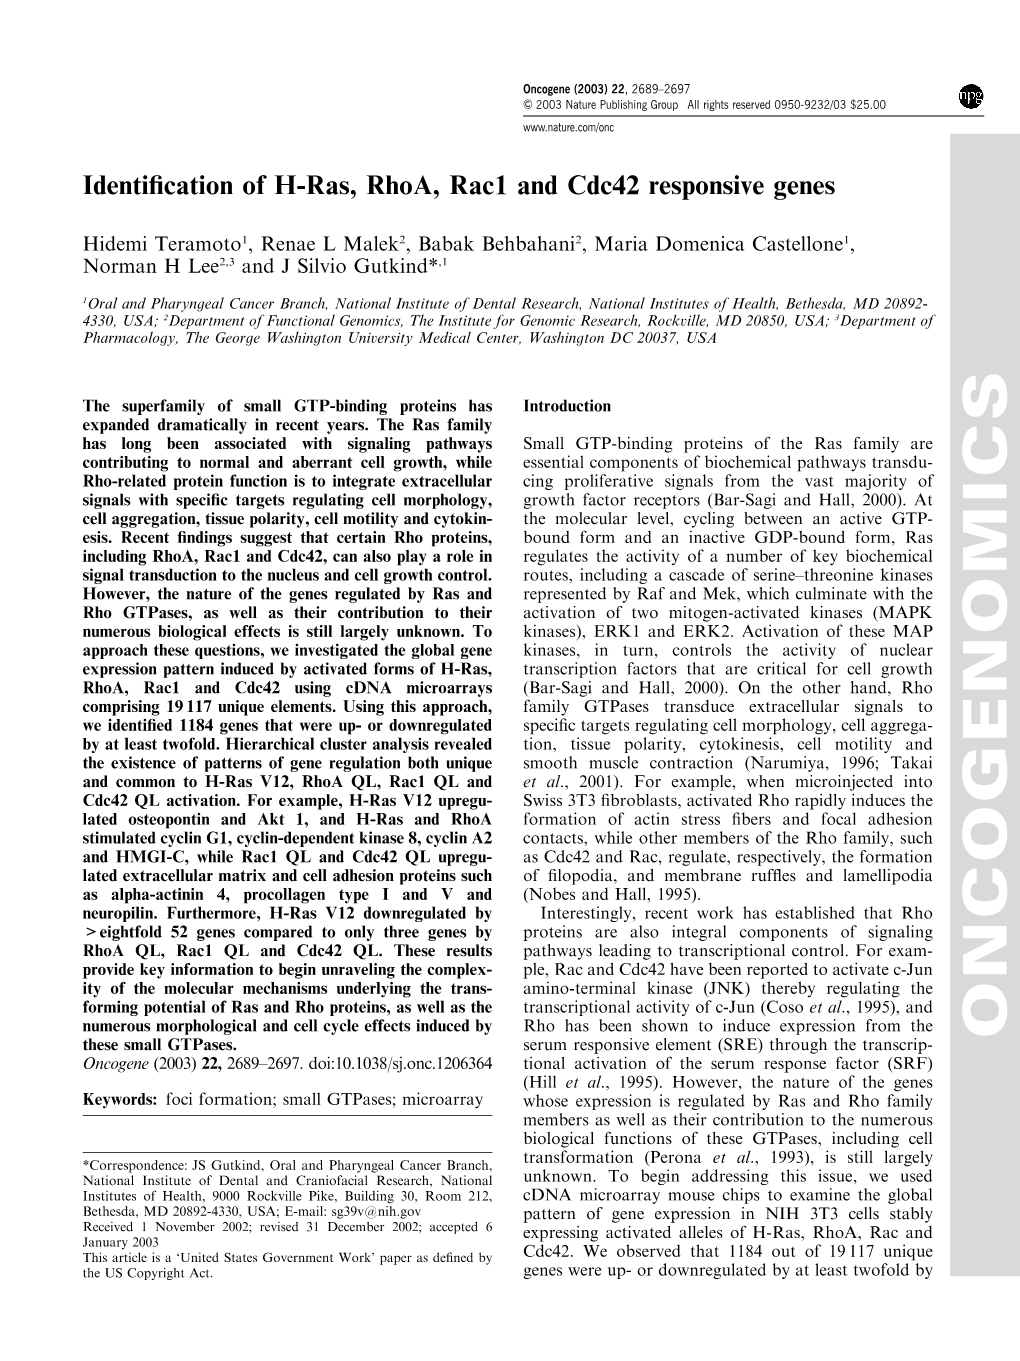 Identification of H-Ras, Rhoa, Rac1 and Cdc42 Responsive Genes